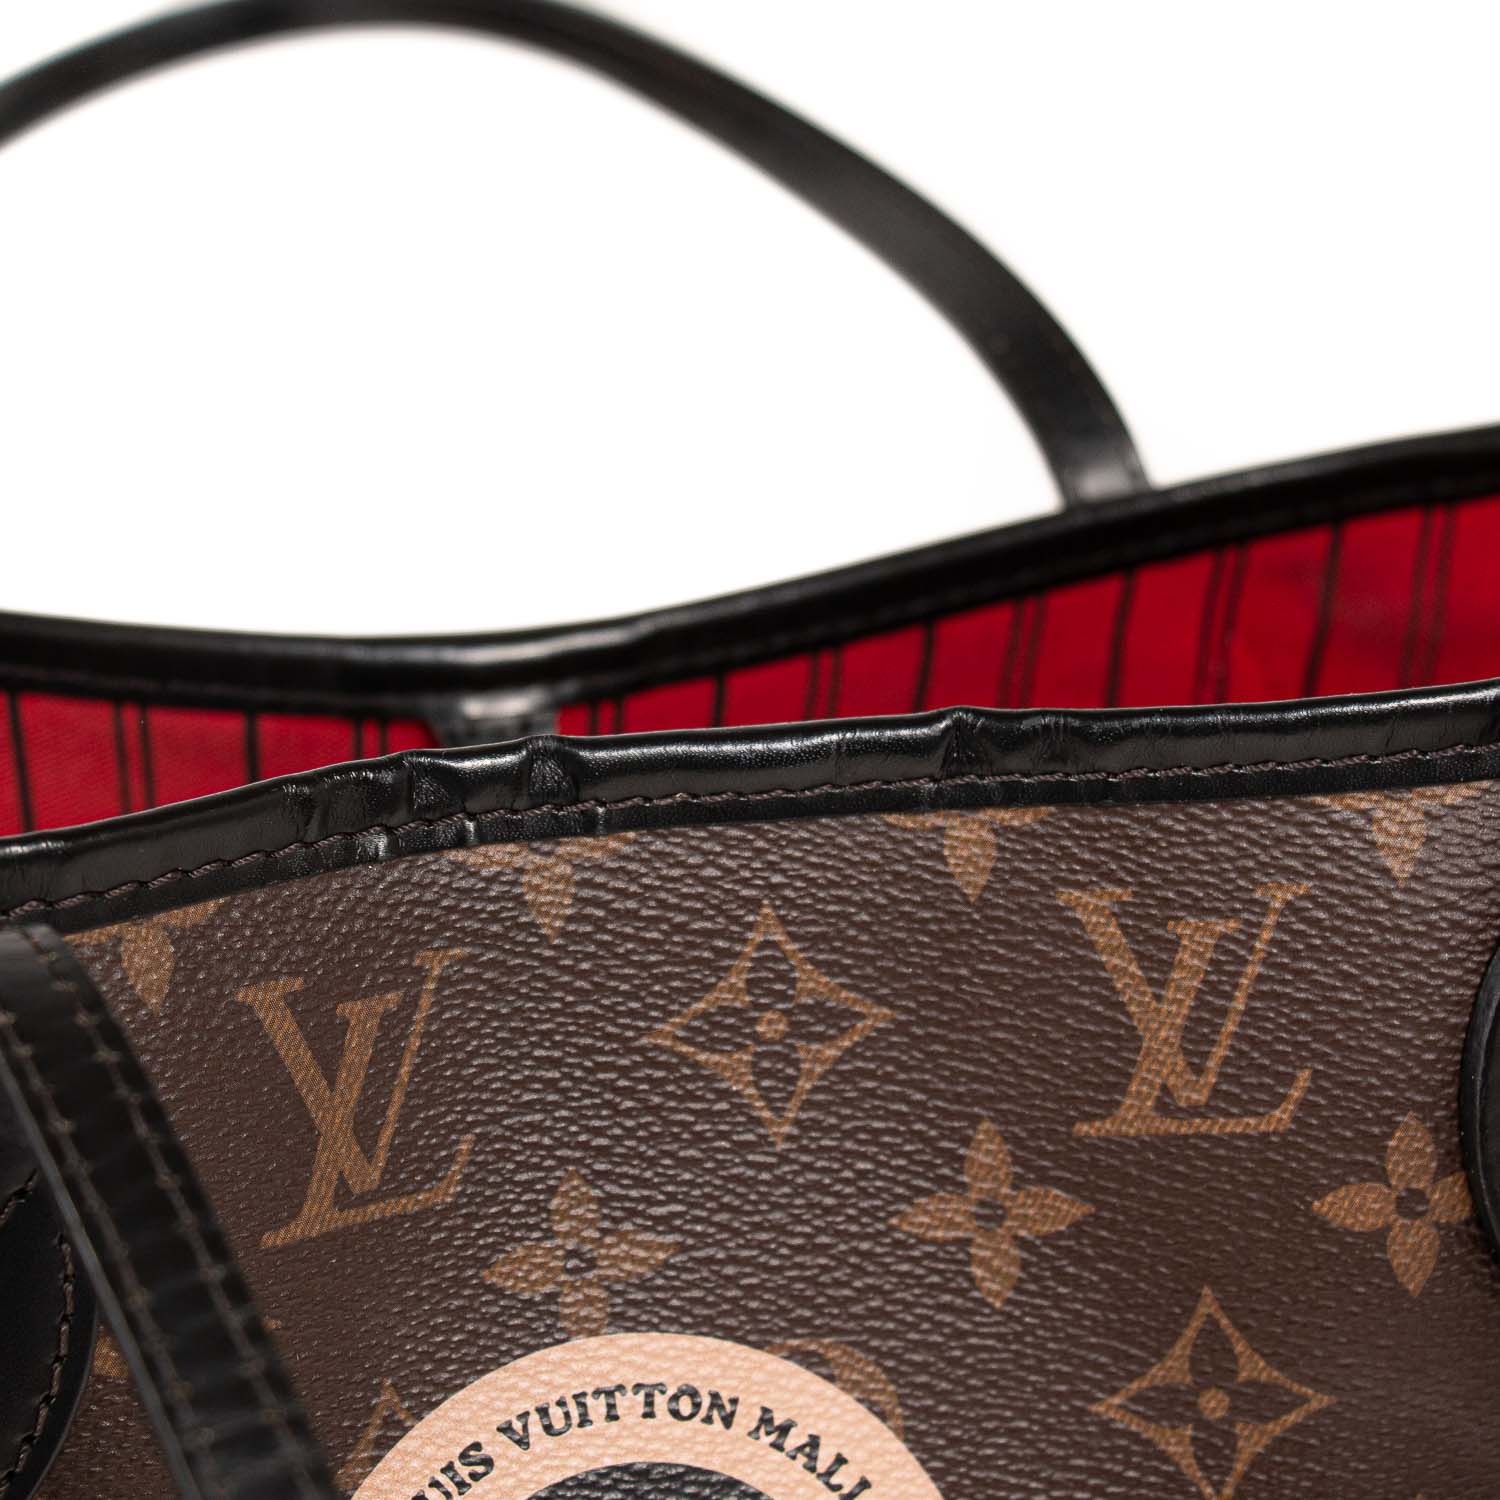 Louis Vuitton Monogram Canvas Neverfull MM Bag Louis Vuitton